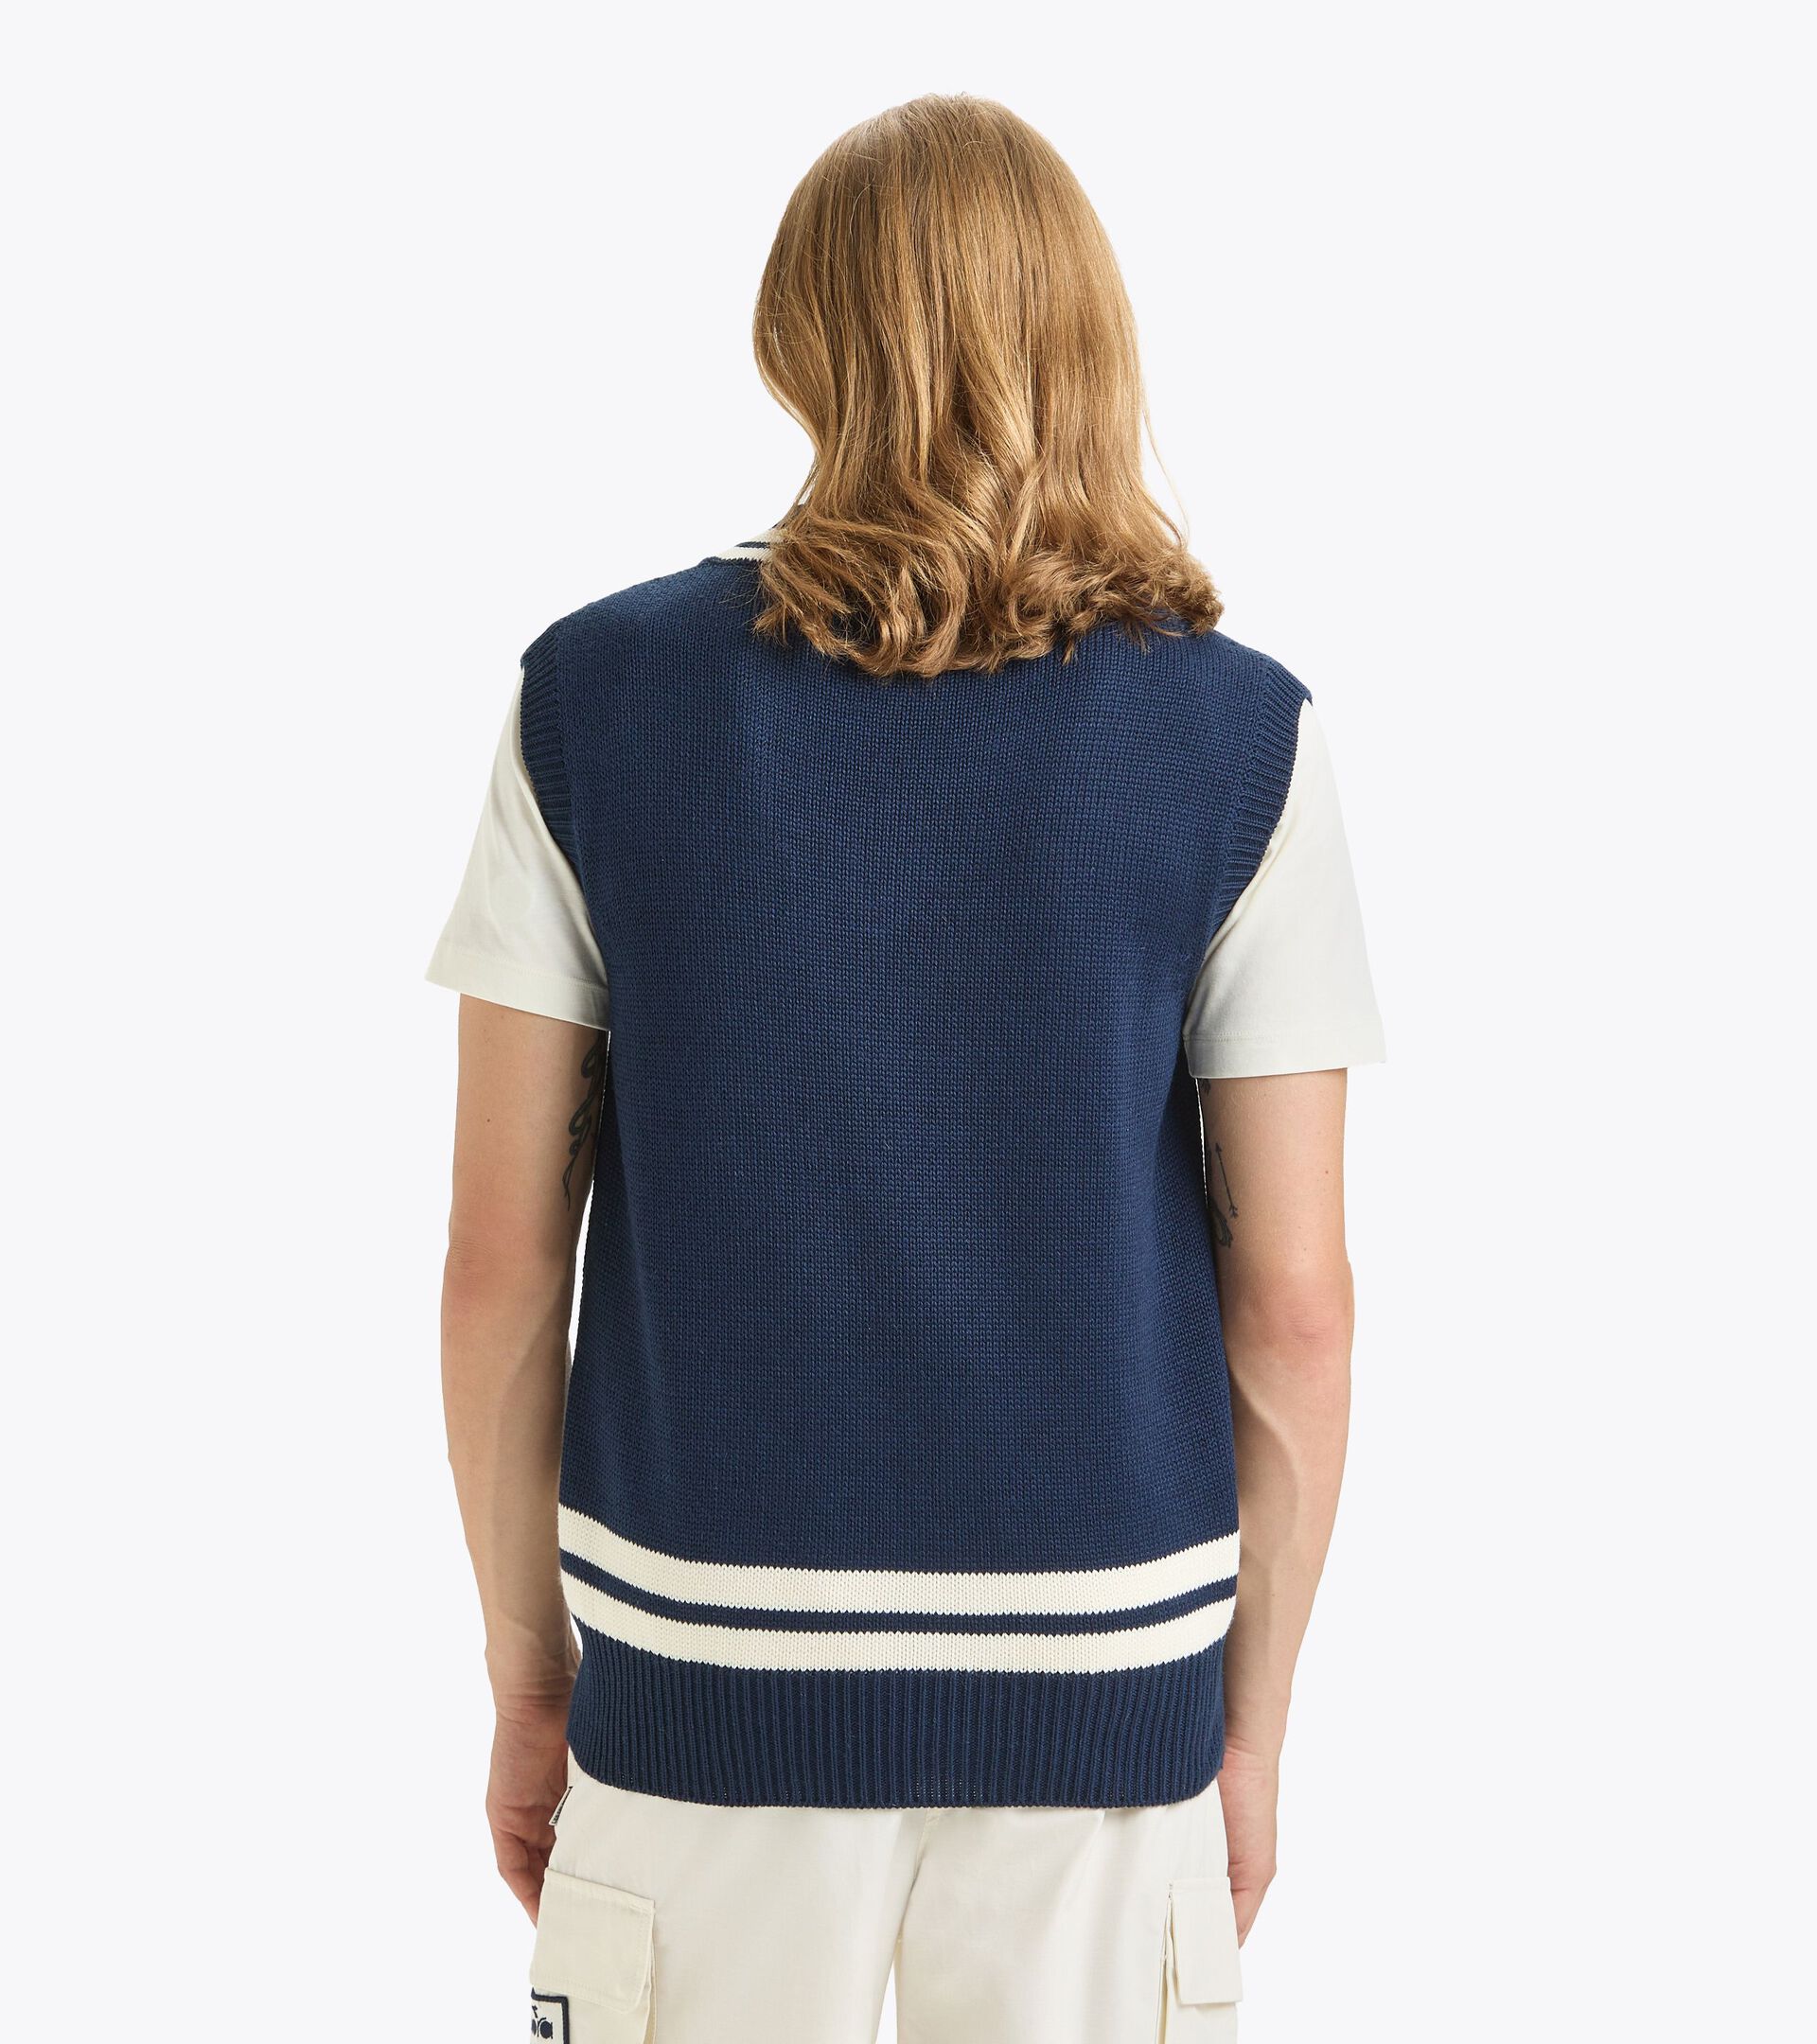 Vest - Made in italy - Gender Neutral GILET LEGACY OCEANA - Diadora